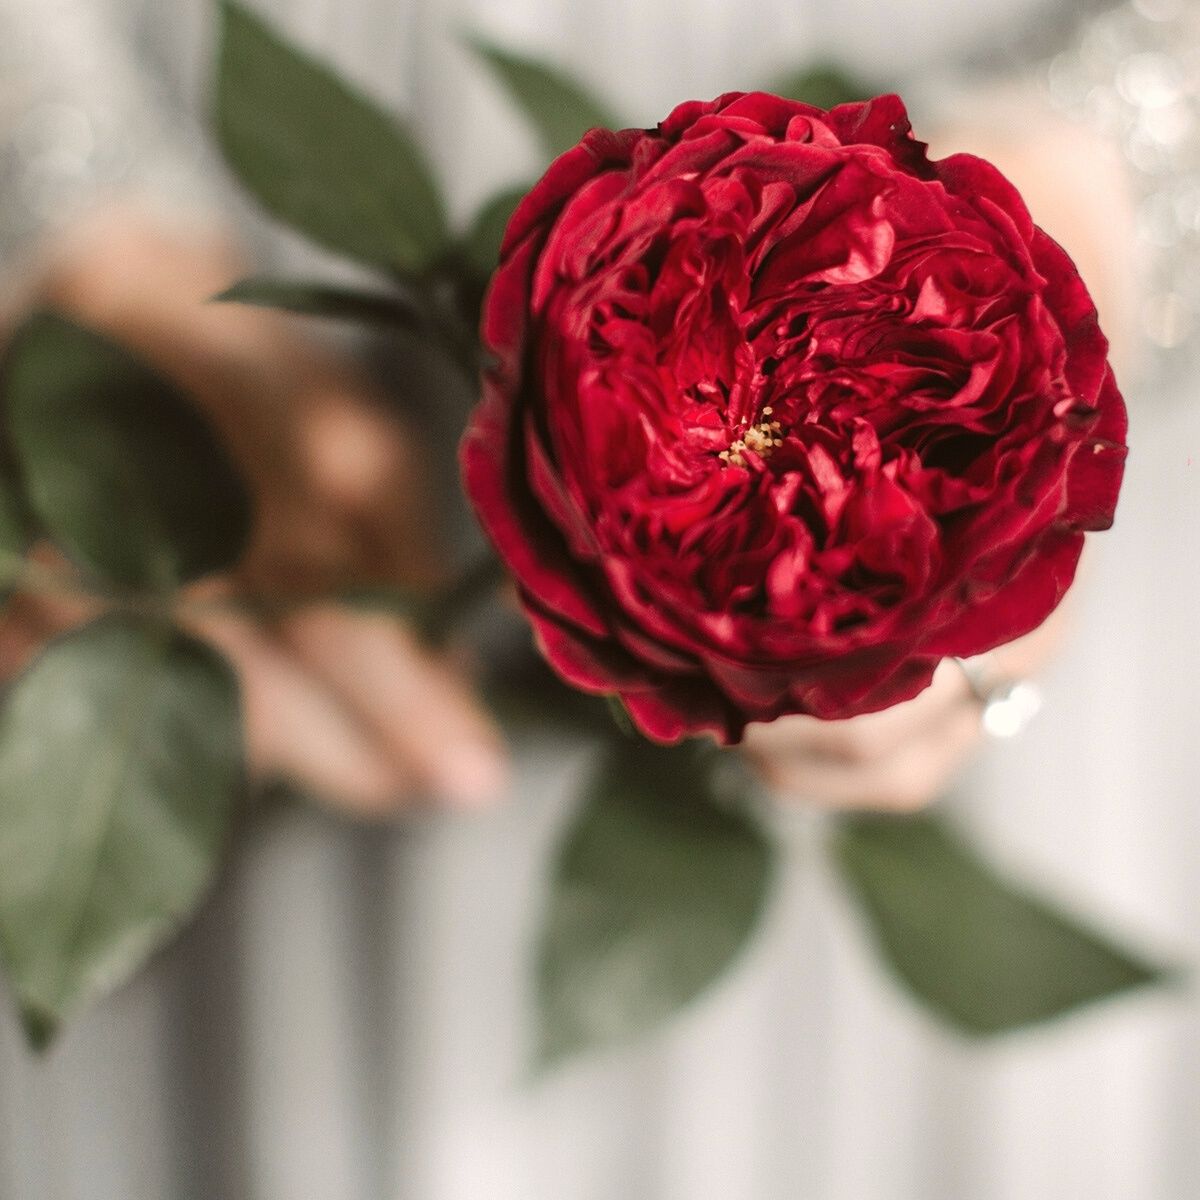 Rose Tess makes part of the floral trend color palette on Thursd